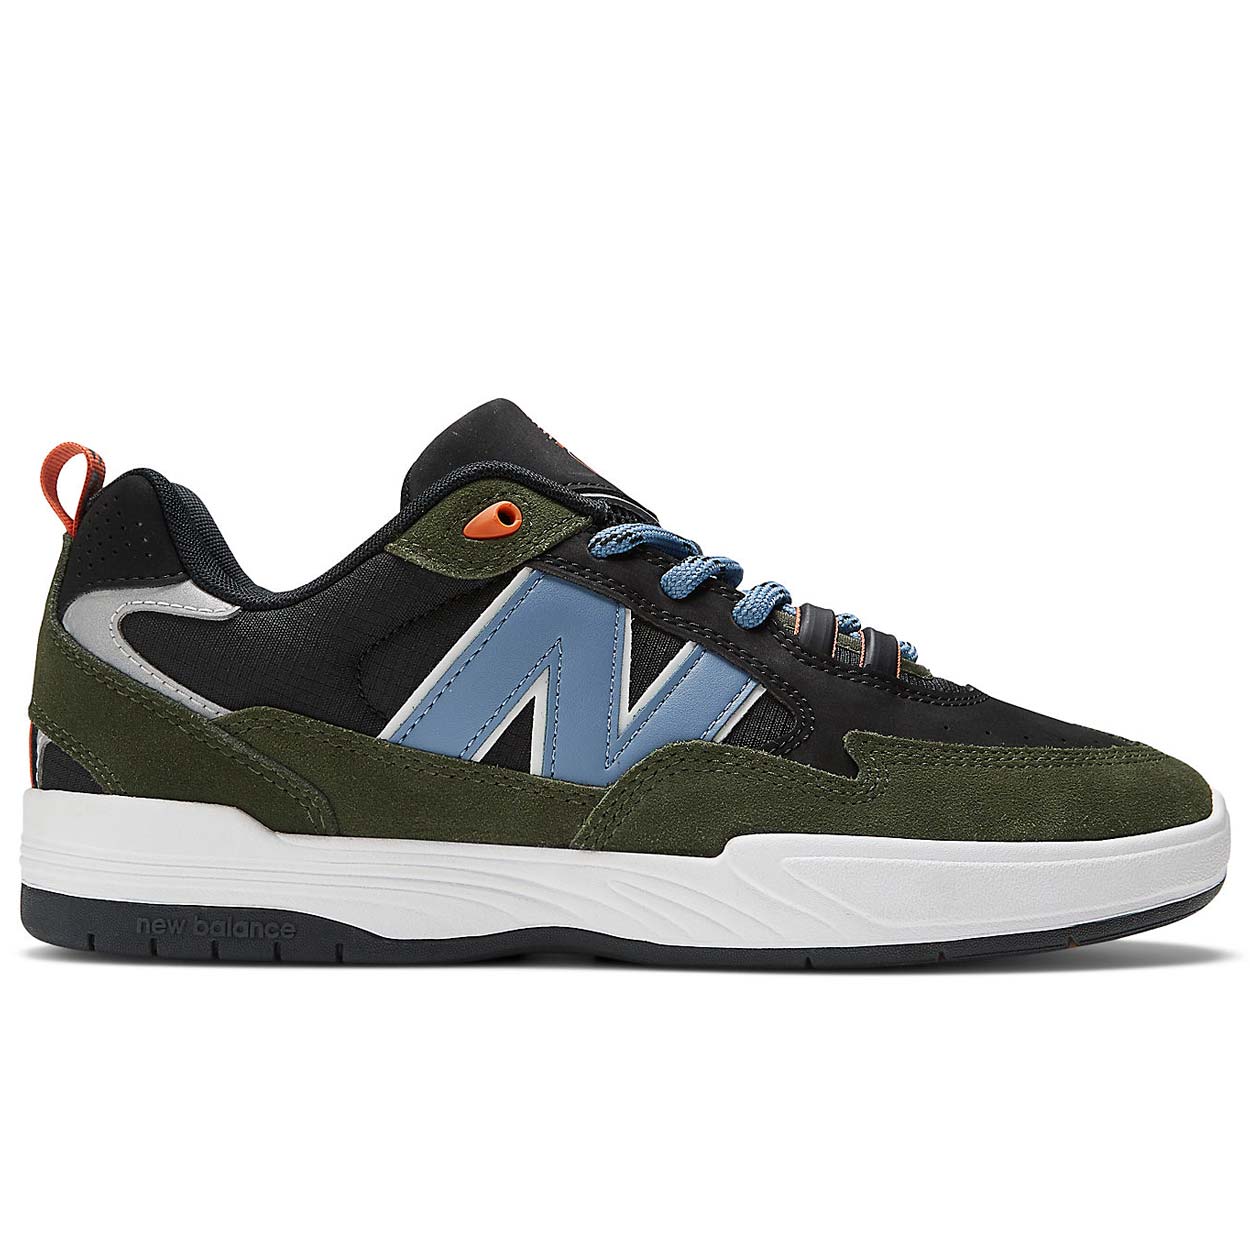 New Balance Numeric NM808 Tiago Skate Shoes - Forest/Black - Mens Skate Shoes by New Balance Numeric